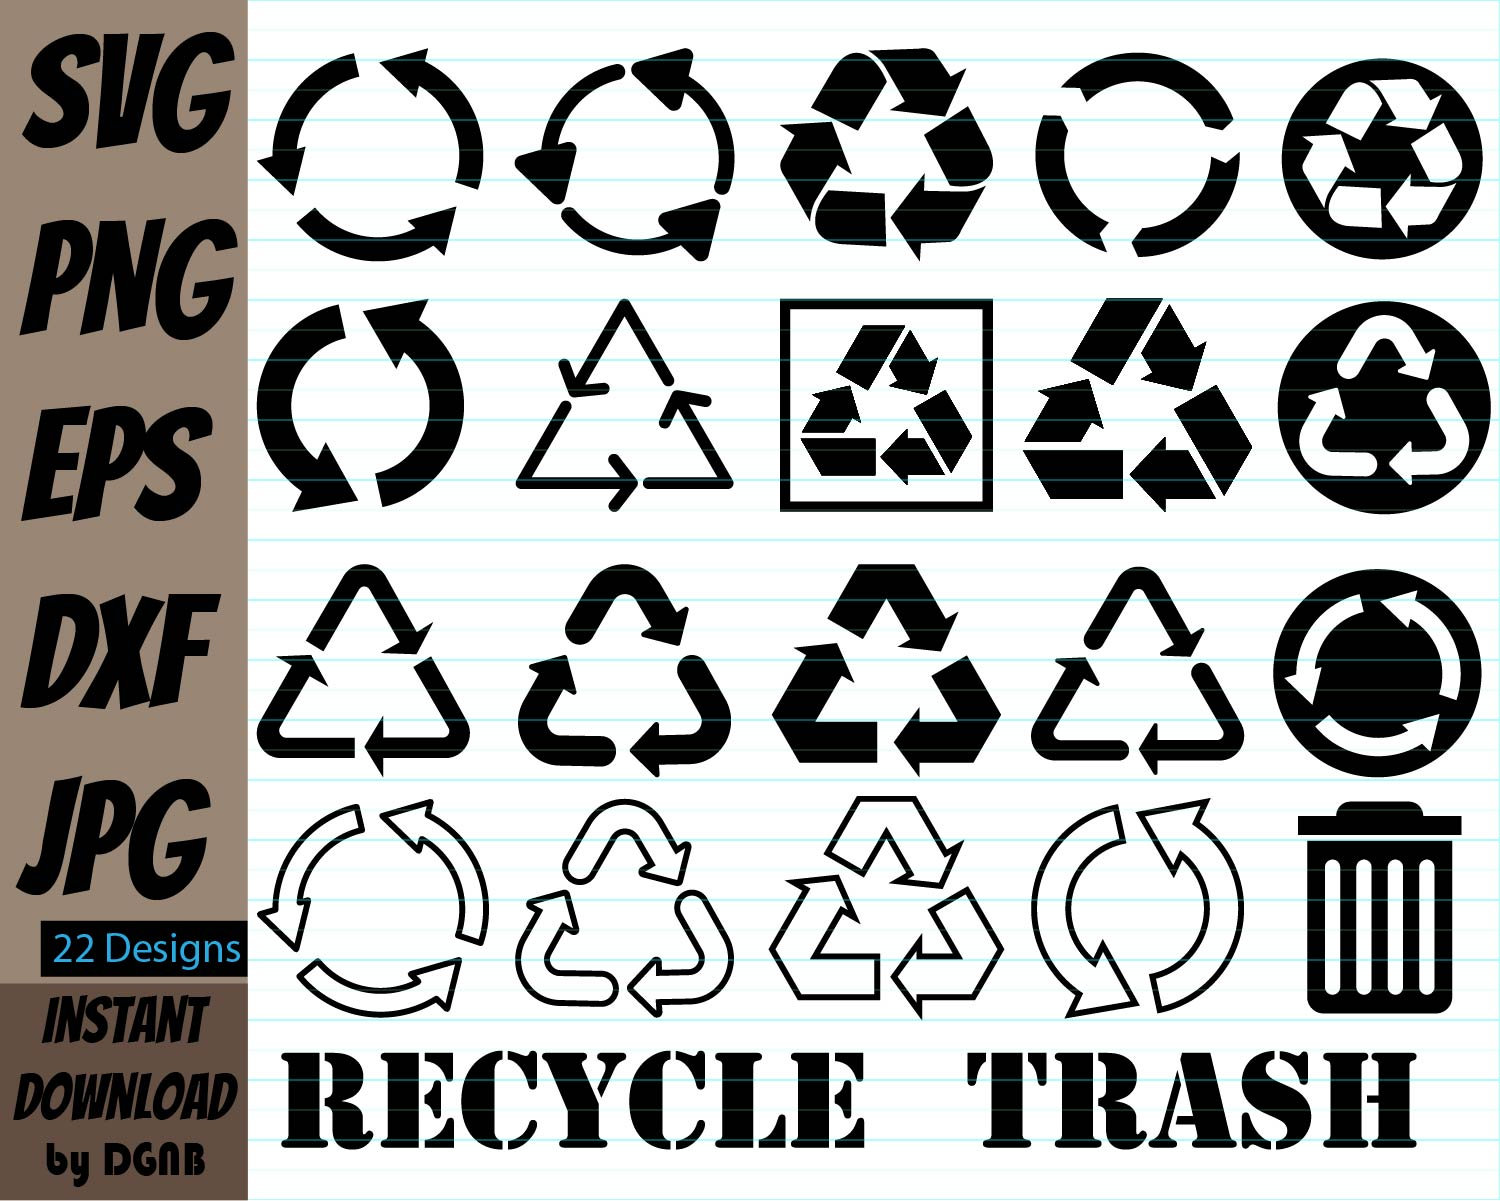 Recyclingsymbol für Kunststoffe, Recycling-Dreieck mit Kennnummer:  Stock-Vektorgrafik (Lizenzfrei) 1513133309